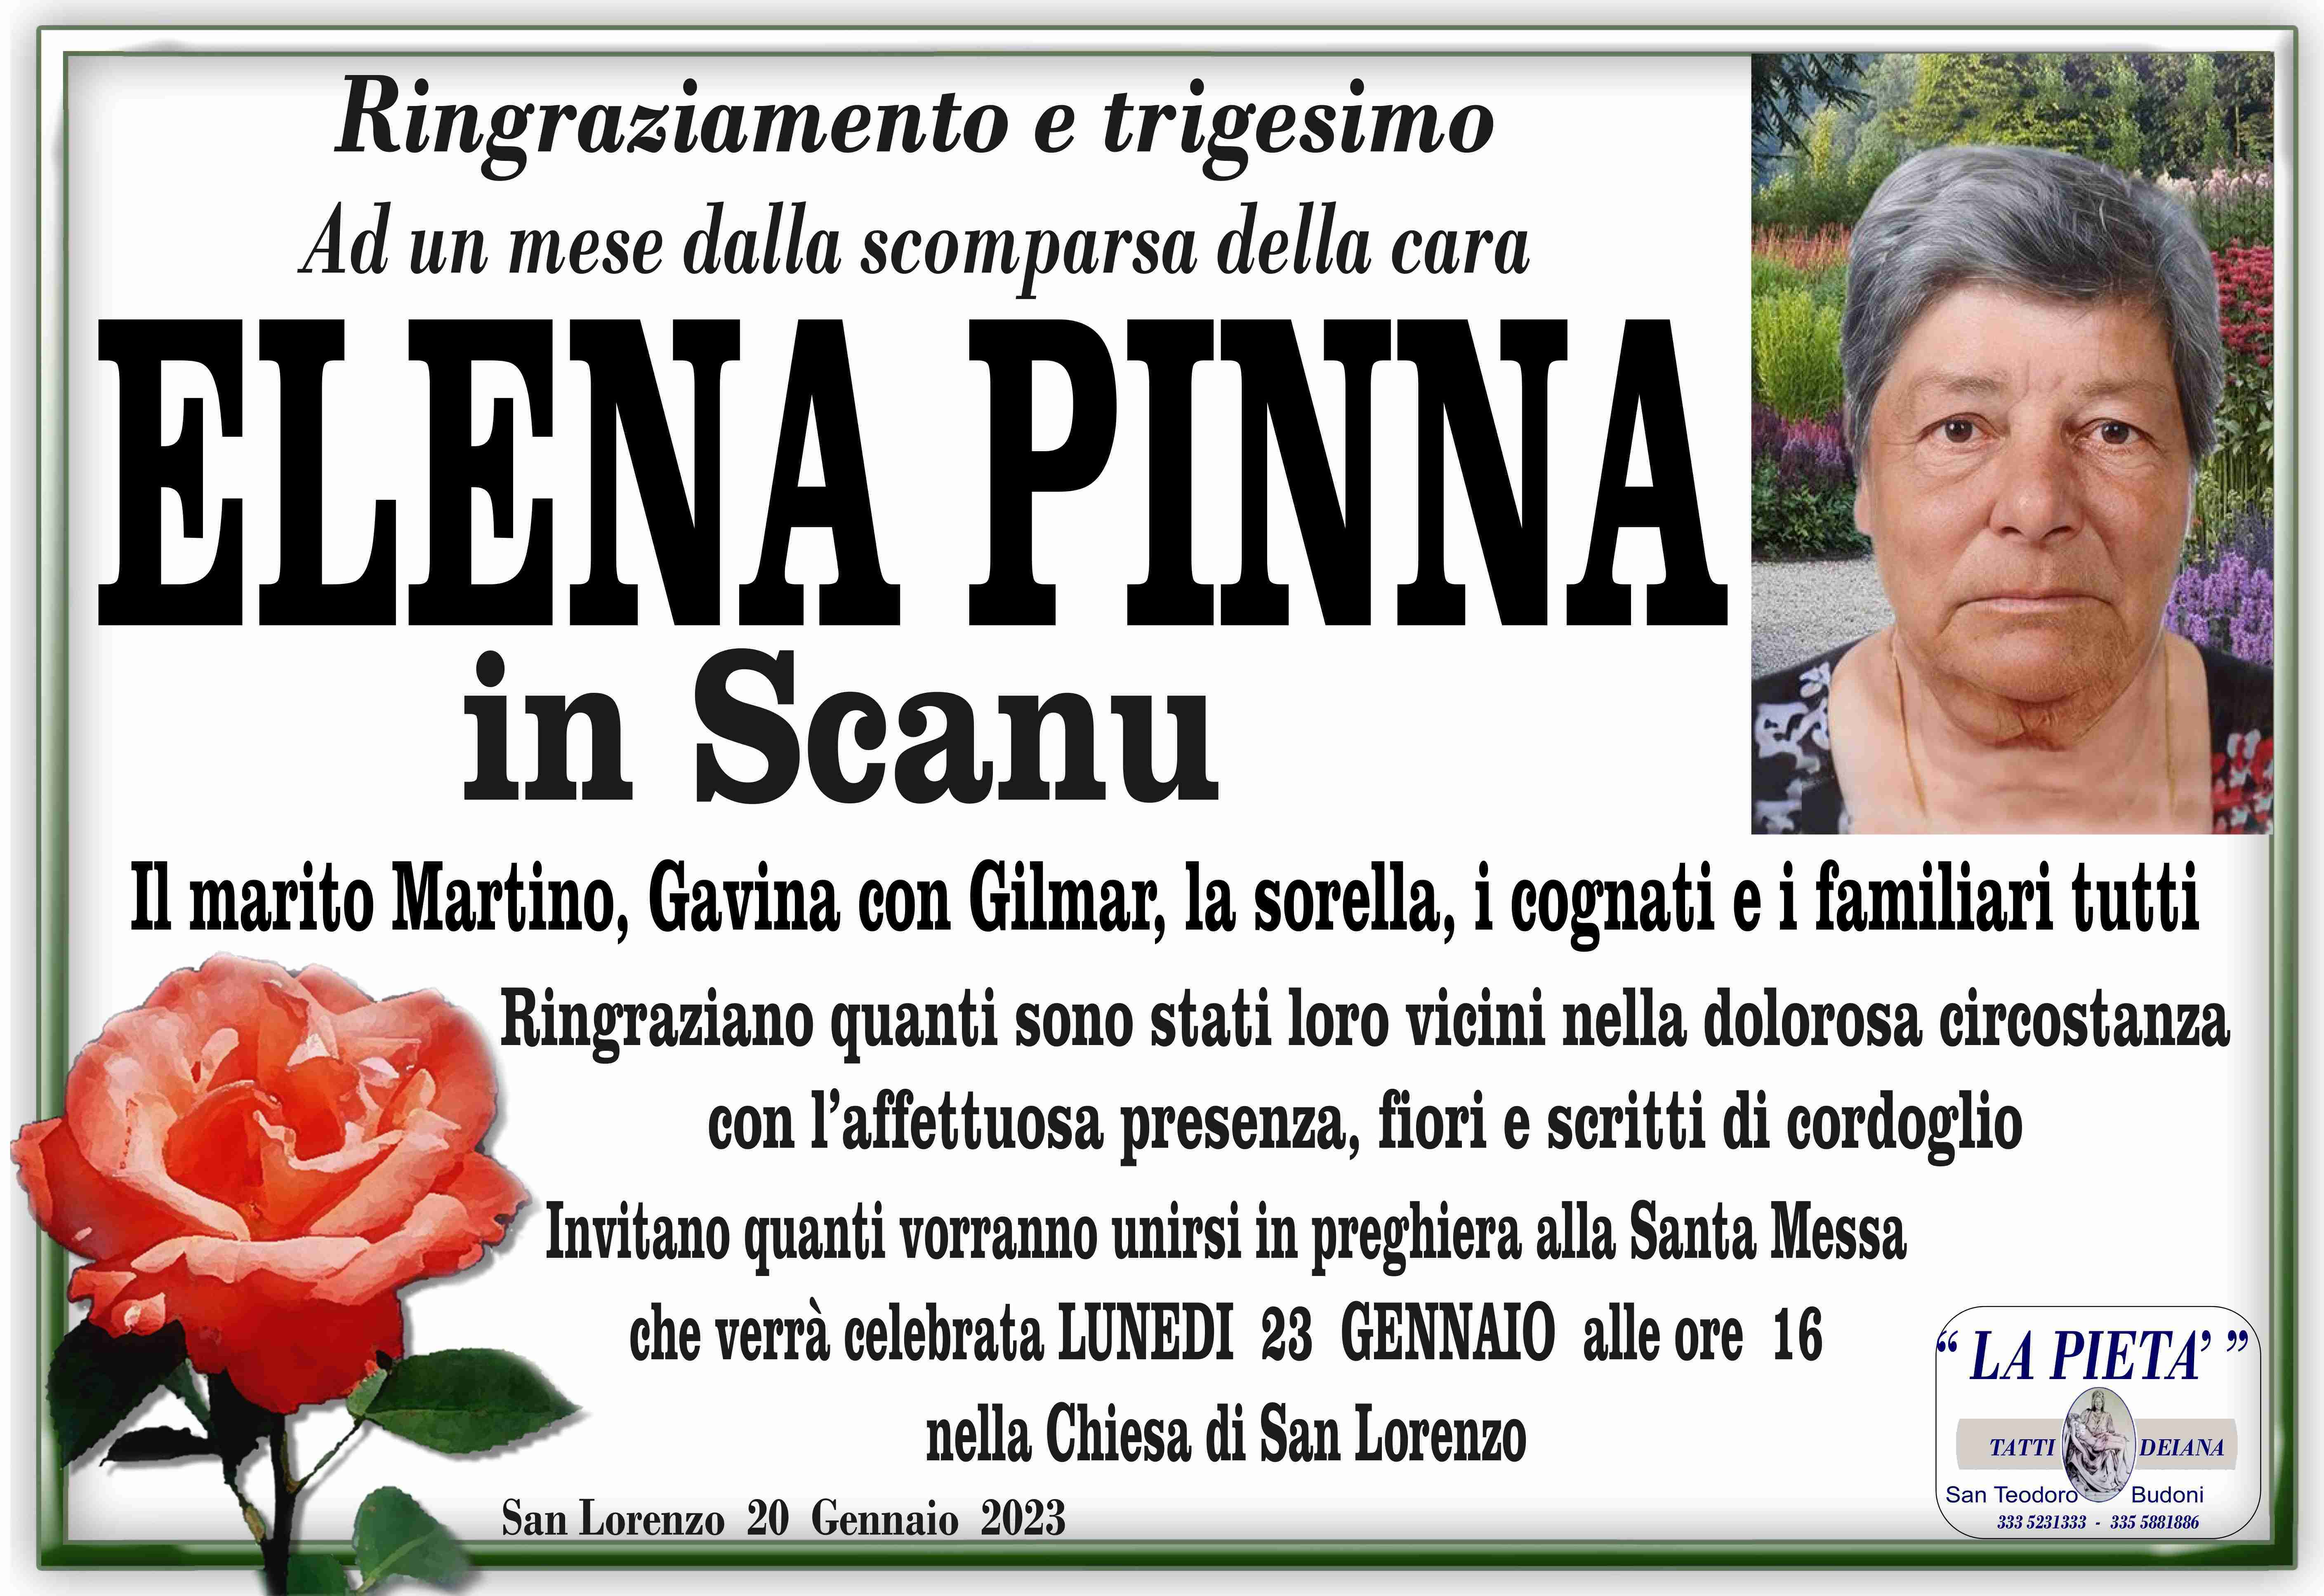 Elena Pinna